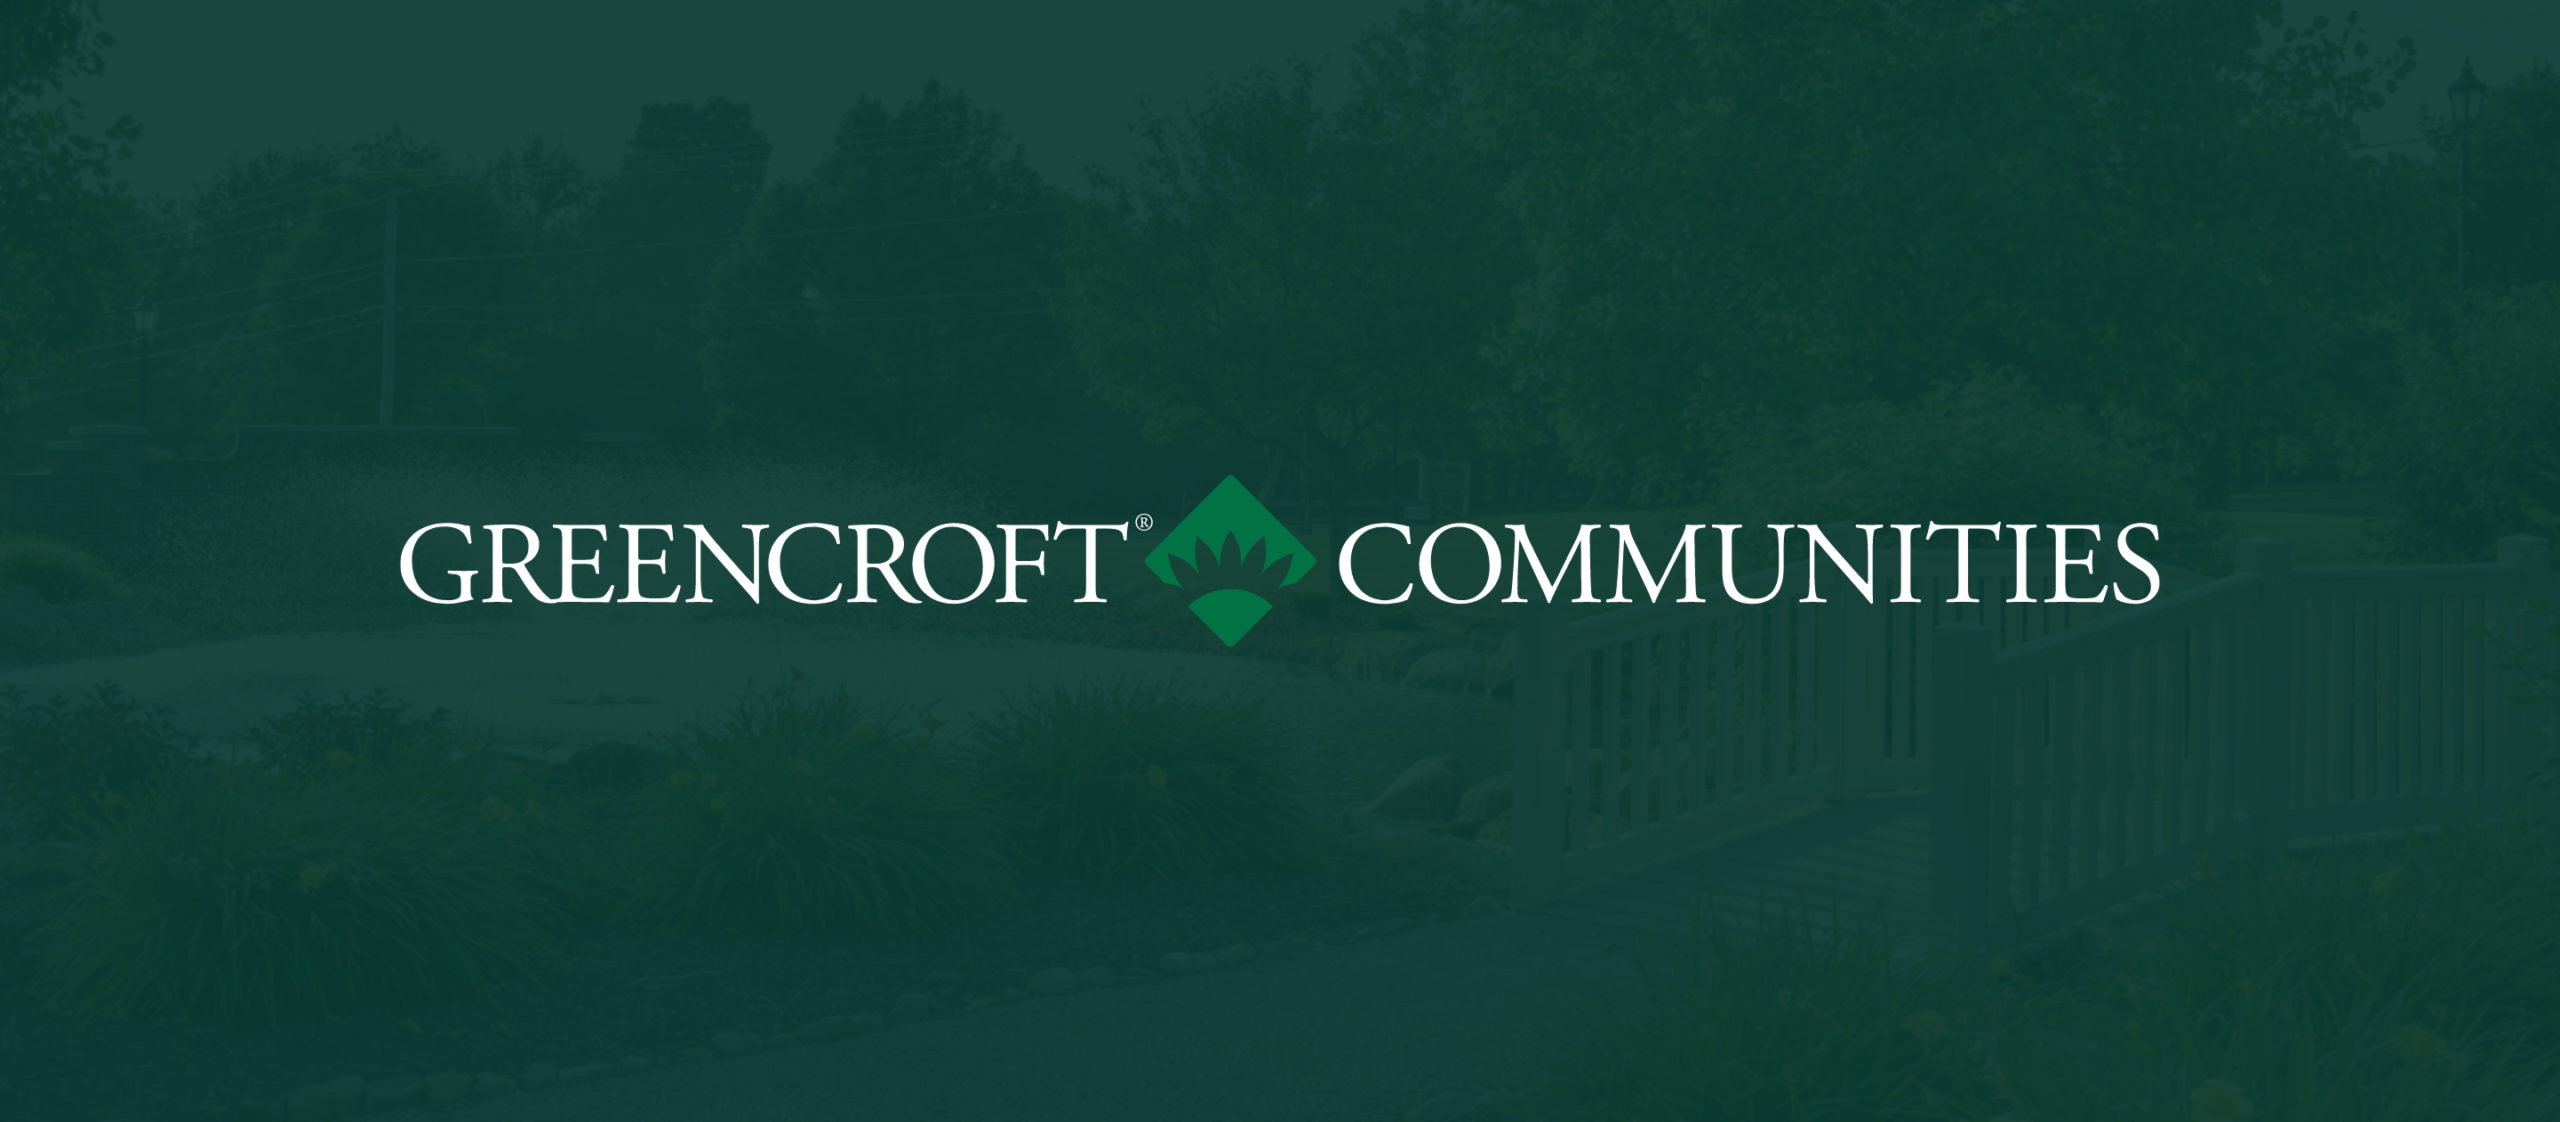 Greencroft communities logo brand